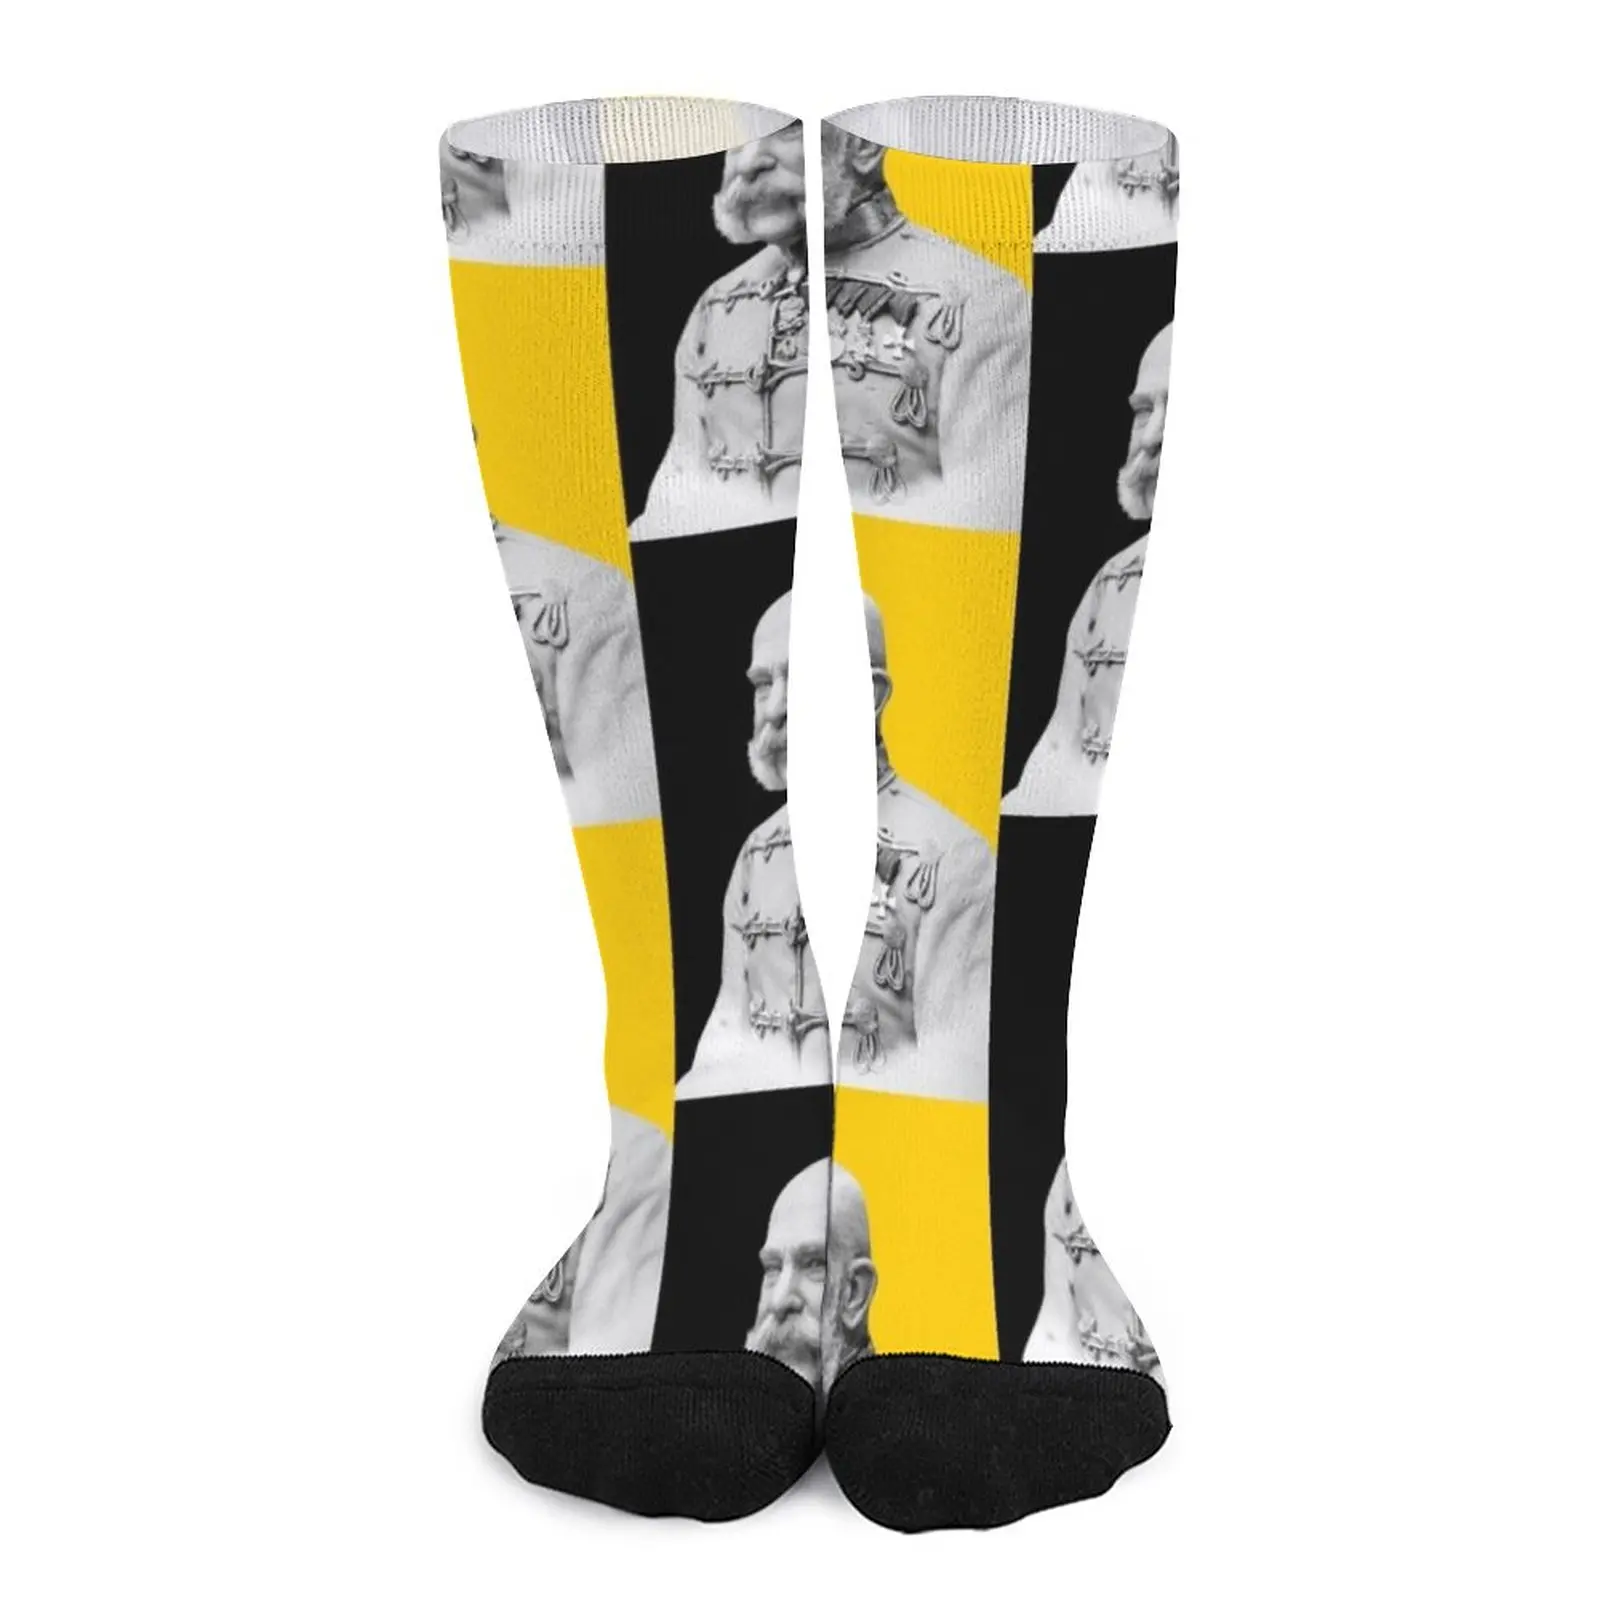 Franz Joseph I of Austria with Flag Socks Crossfit socks heated socks joseph brodsky